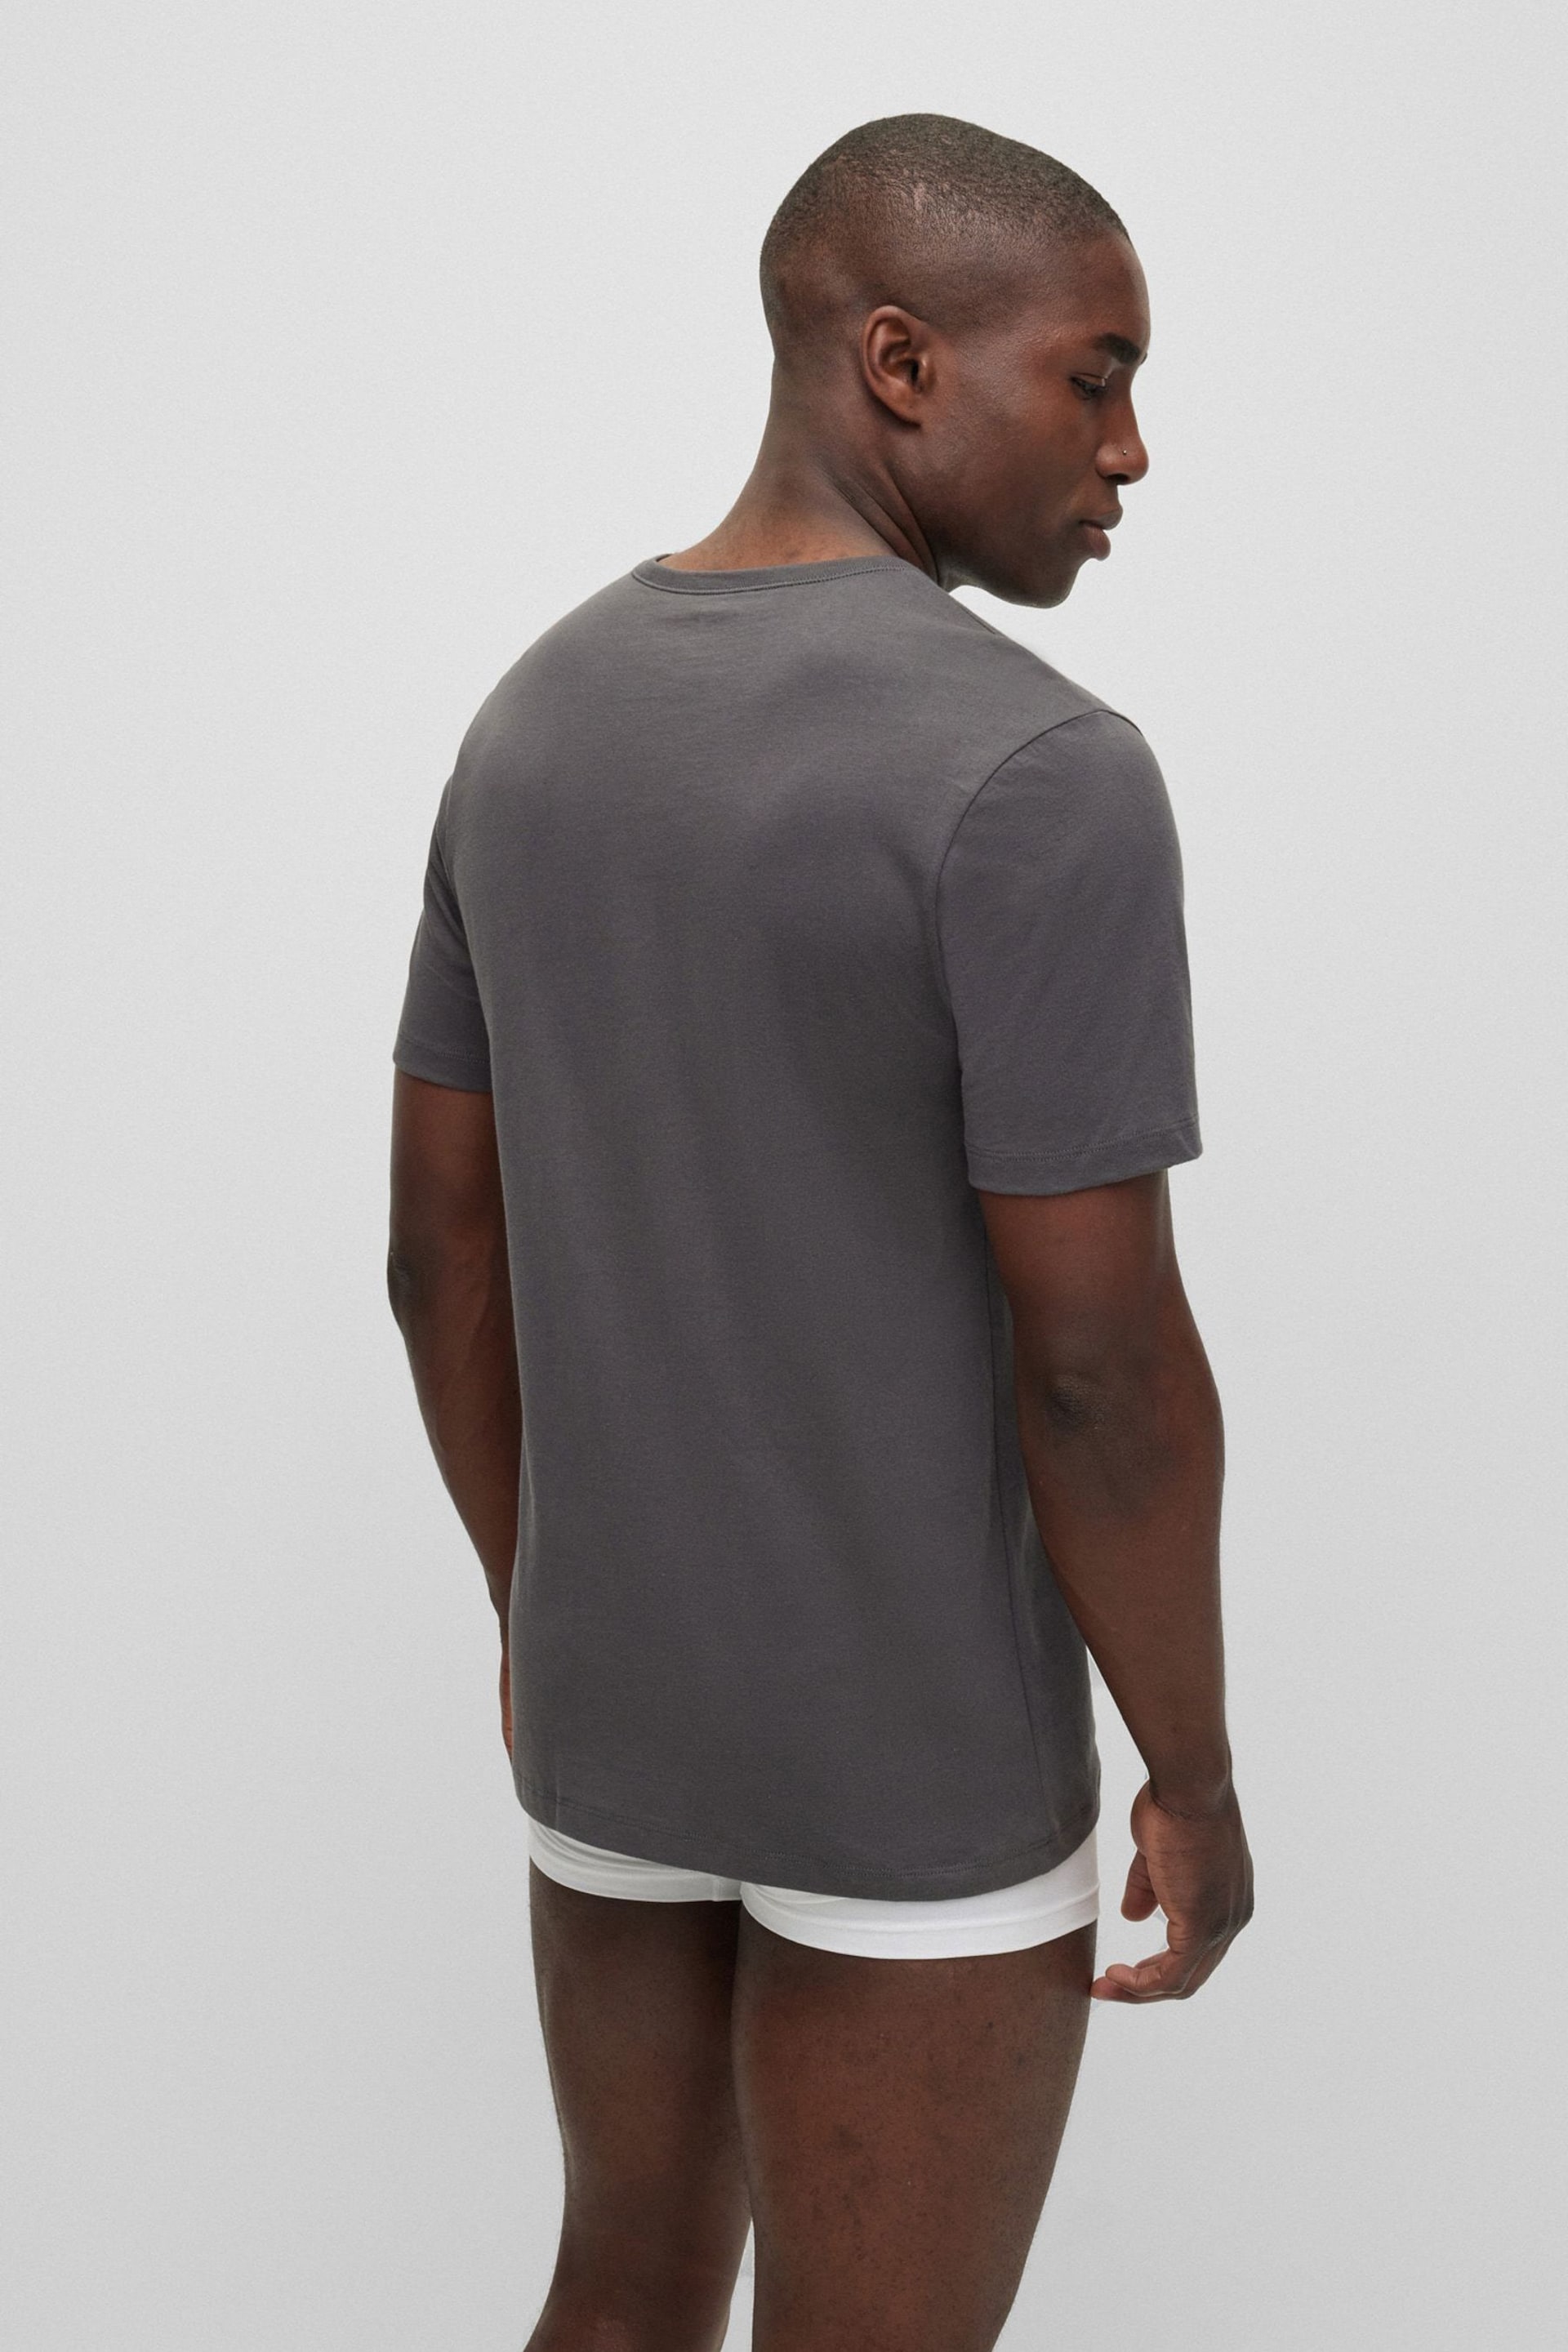 BOSS Black/Grey/White T-Shirt Classic T-Shirts 3 Pack - Image 9 of 9